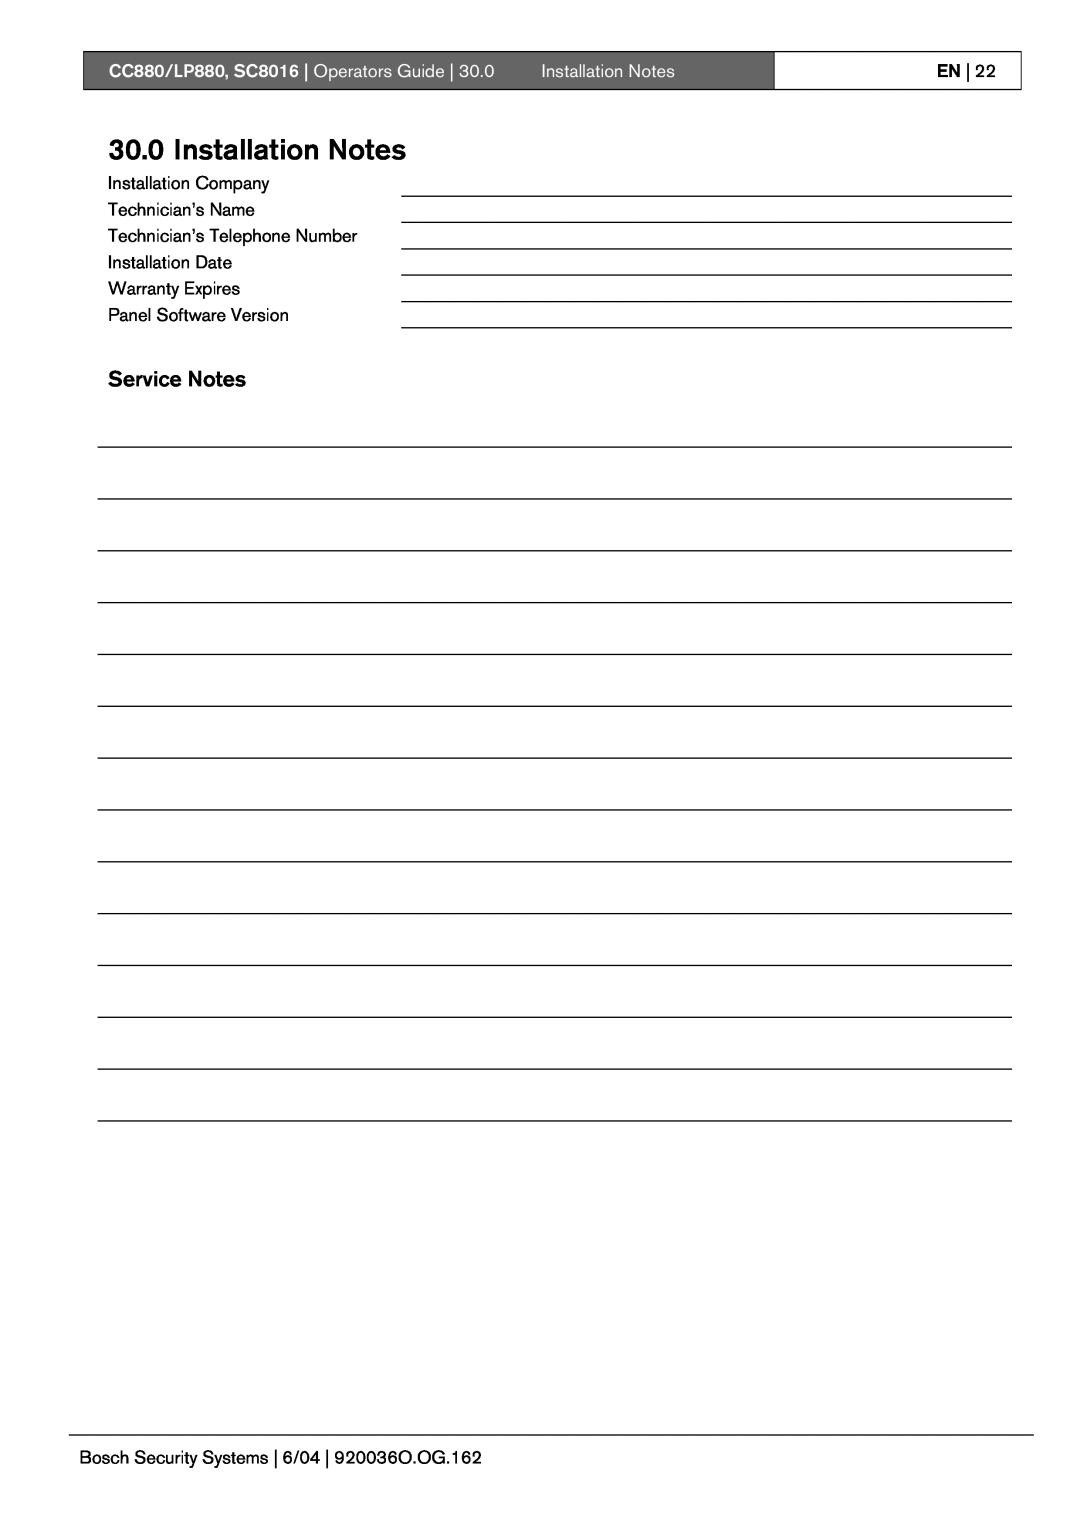 Bosch Appliances manual Installation Notes, Service Notes, CC880/LP880, SC8016 Operators Guide 